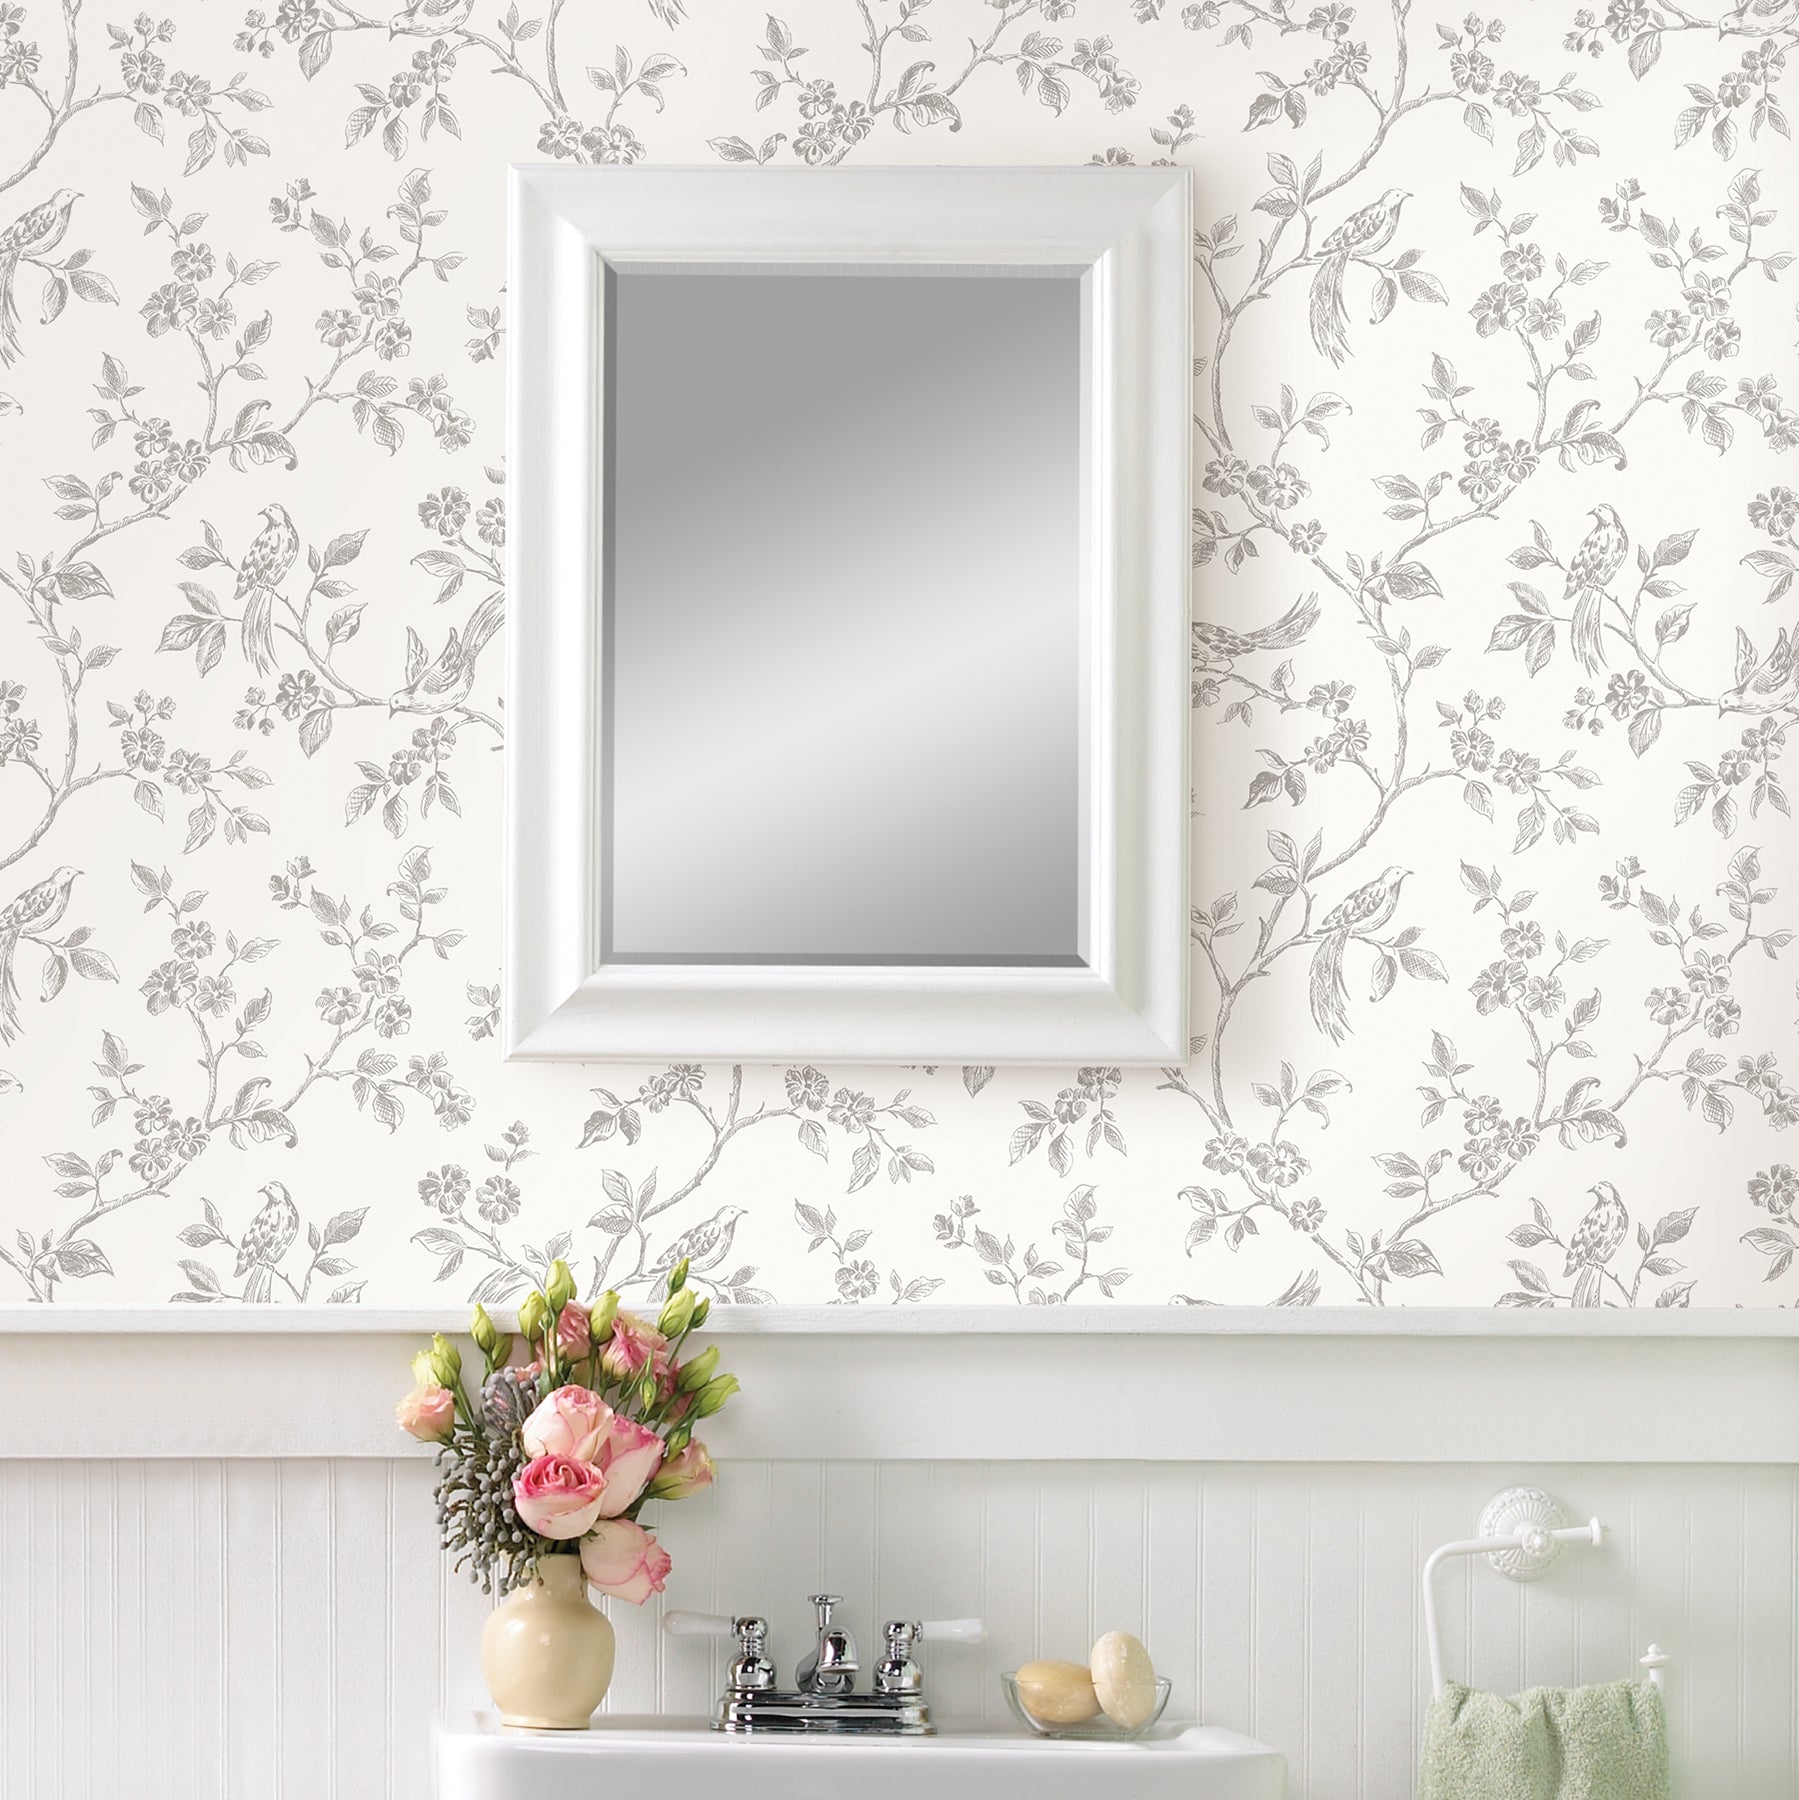 View 2814-24977 bath whites off whites flowers wallpaper advantage Wallpaper